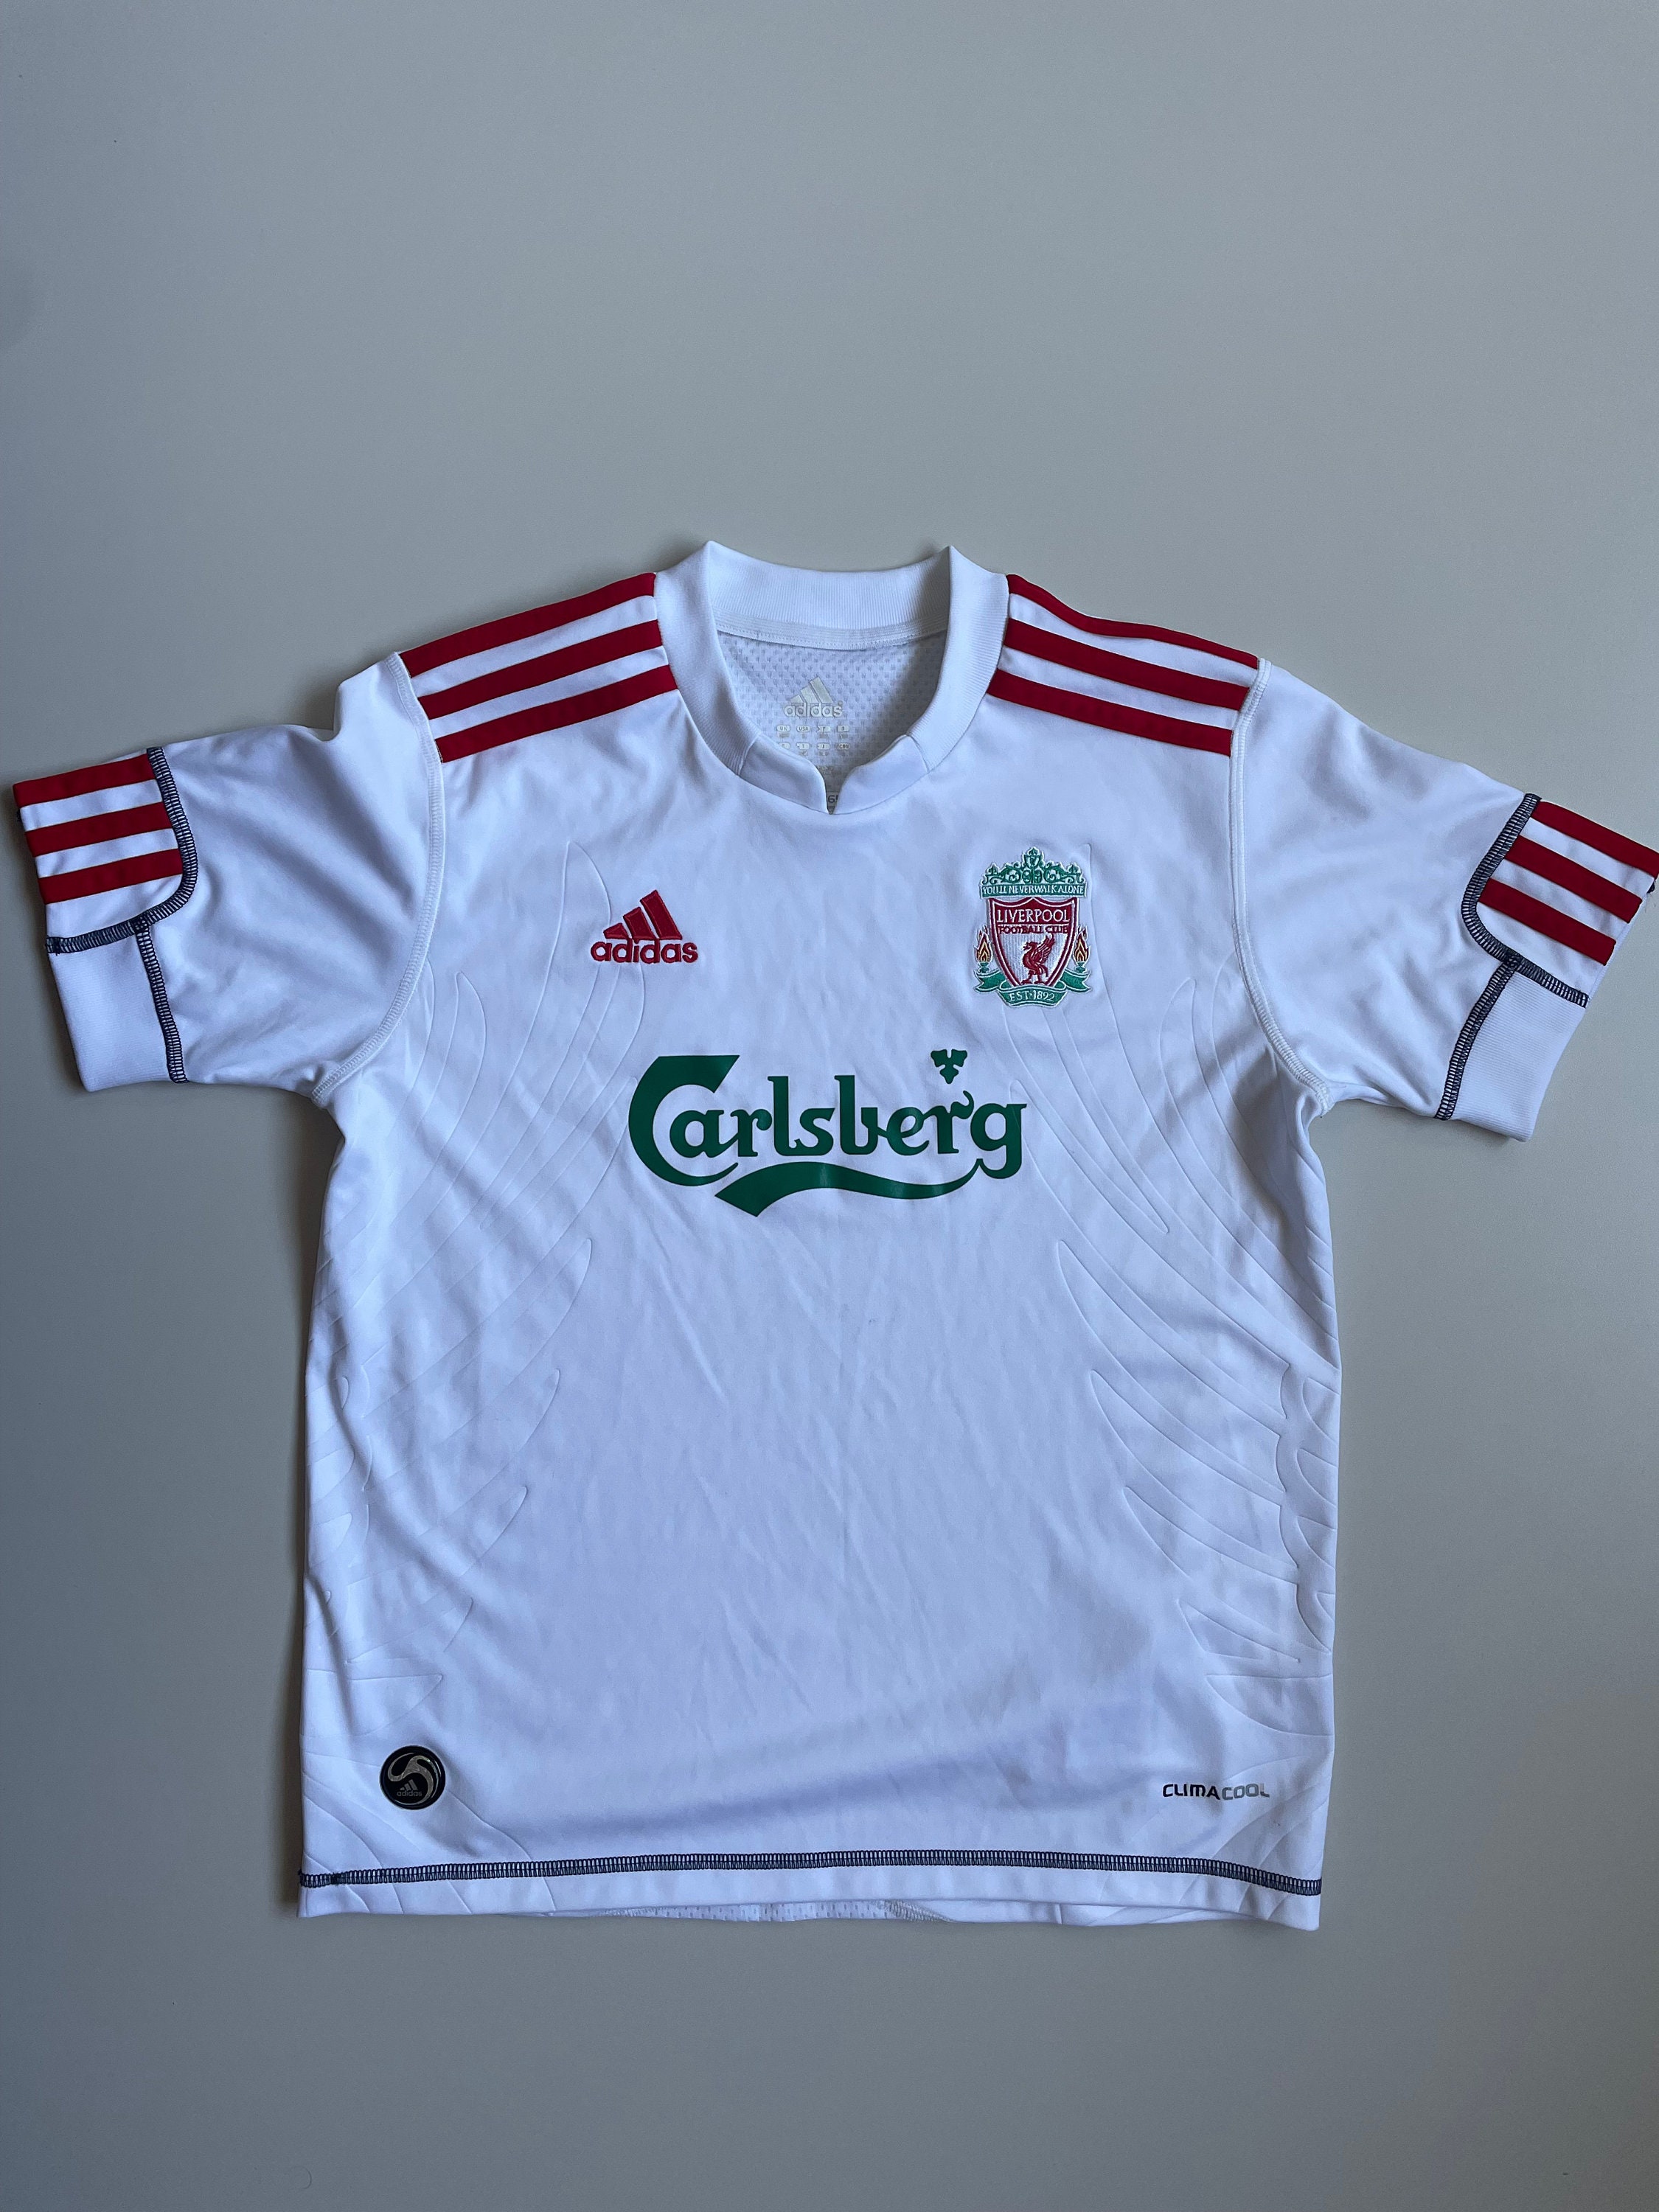 Liverpool Adidas 2009/10 Away Kit / Jersey Leak? - FOOTBALL FASHION